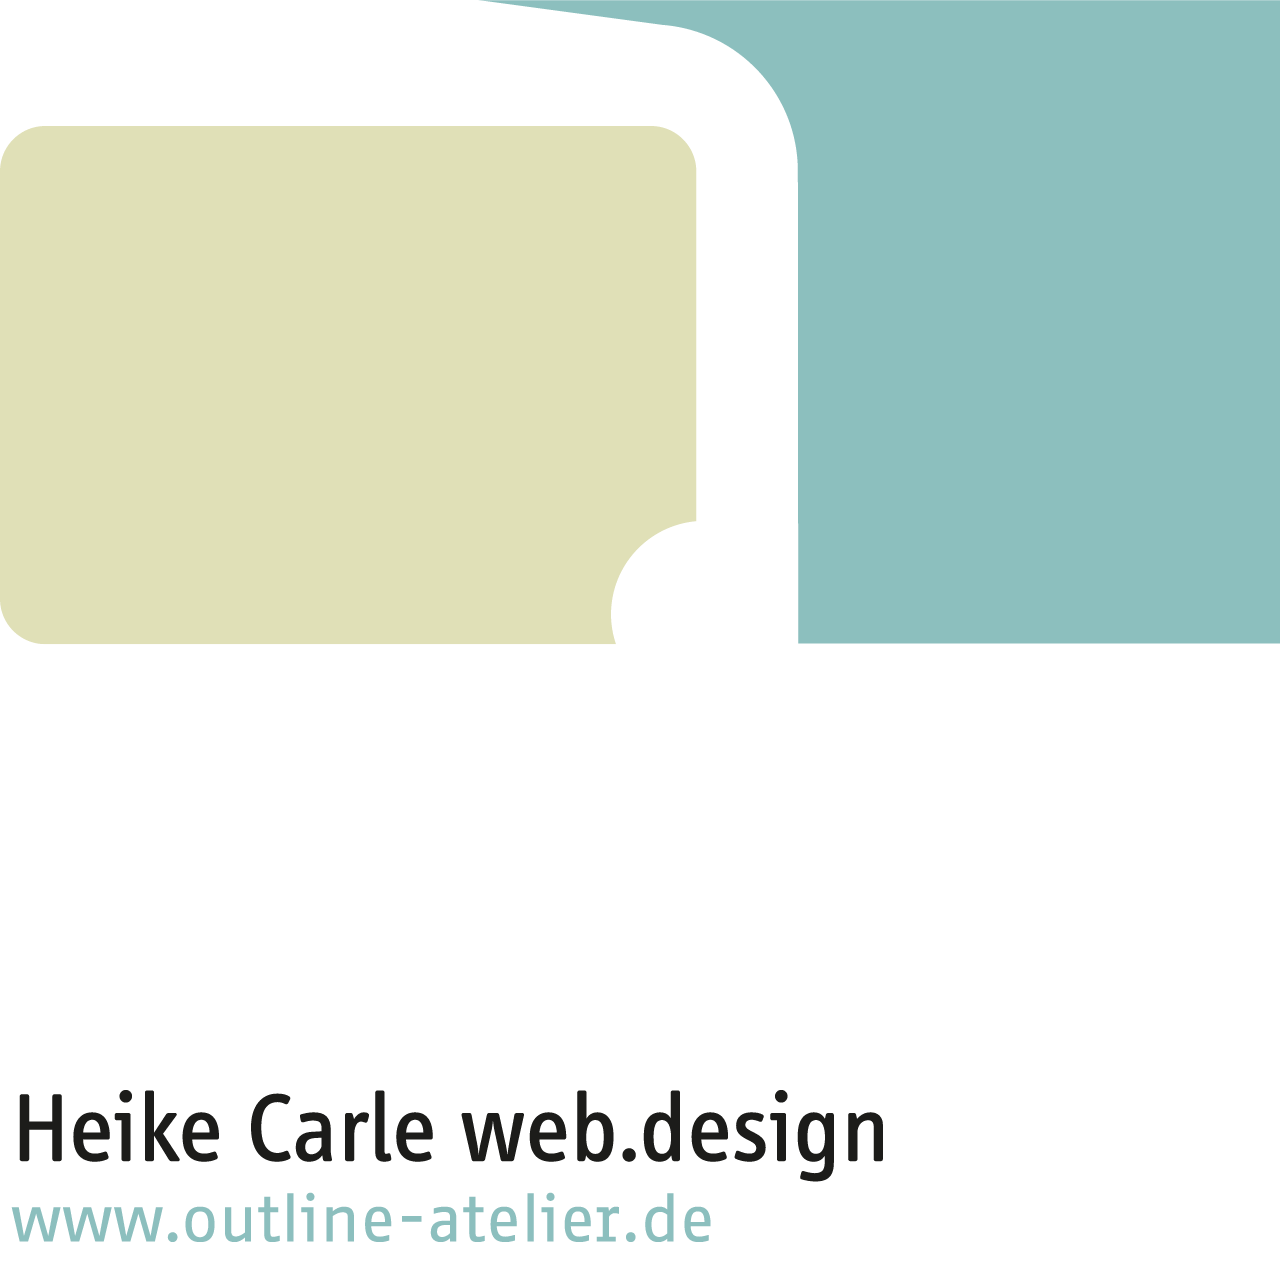 Logo Heike Carle web.design